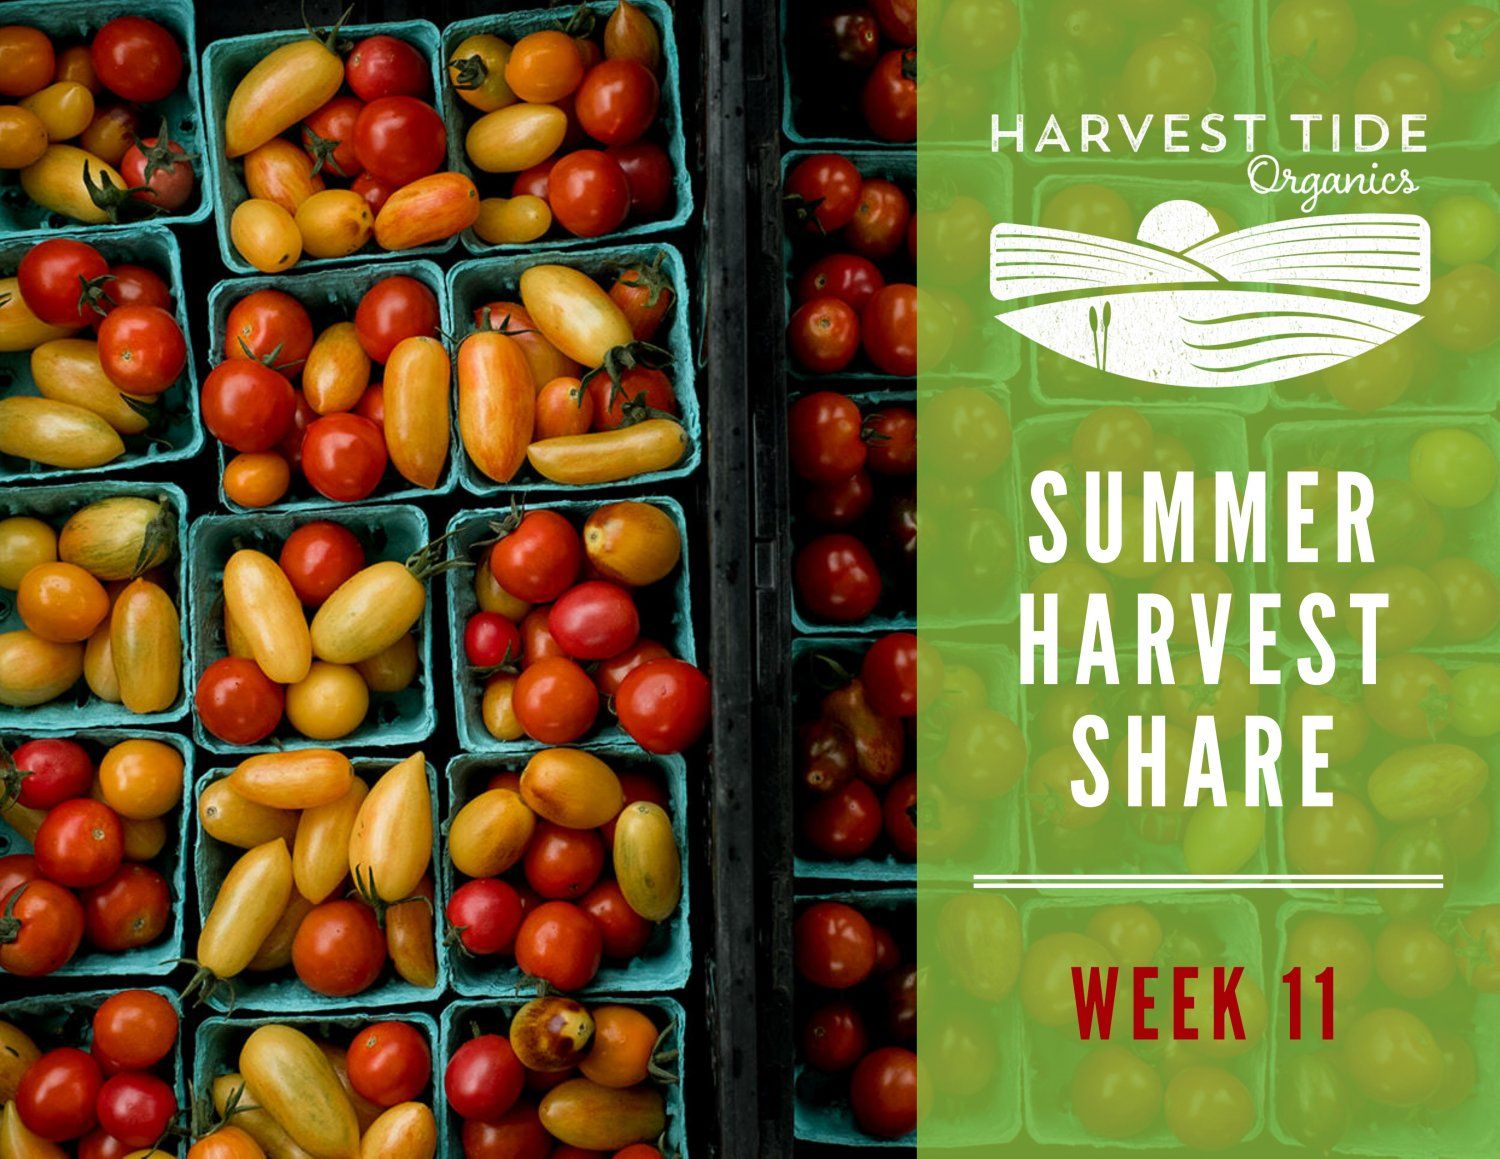 Week 11 - Summer Harvest Share